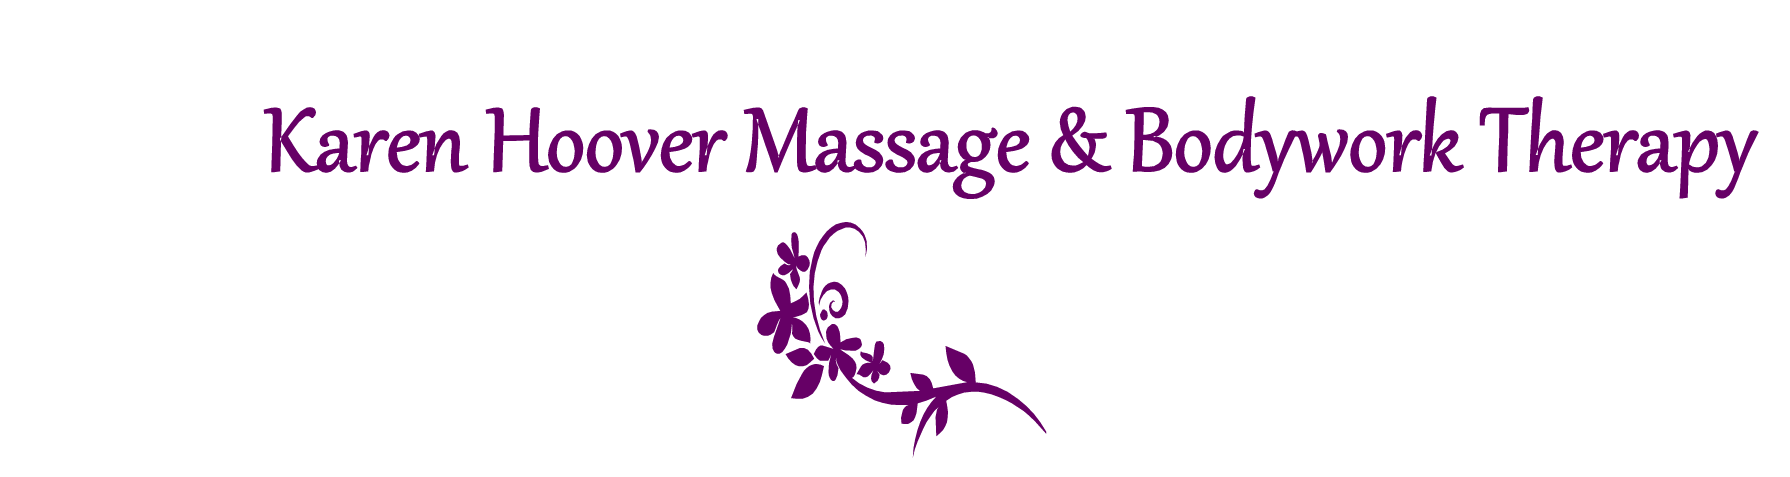 Karen Hoover Massage & Bodywork Therapy